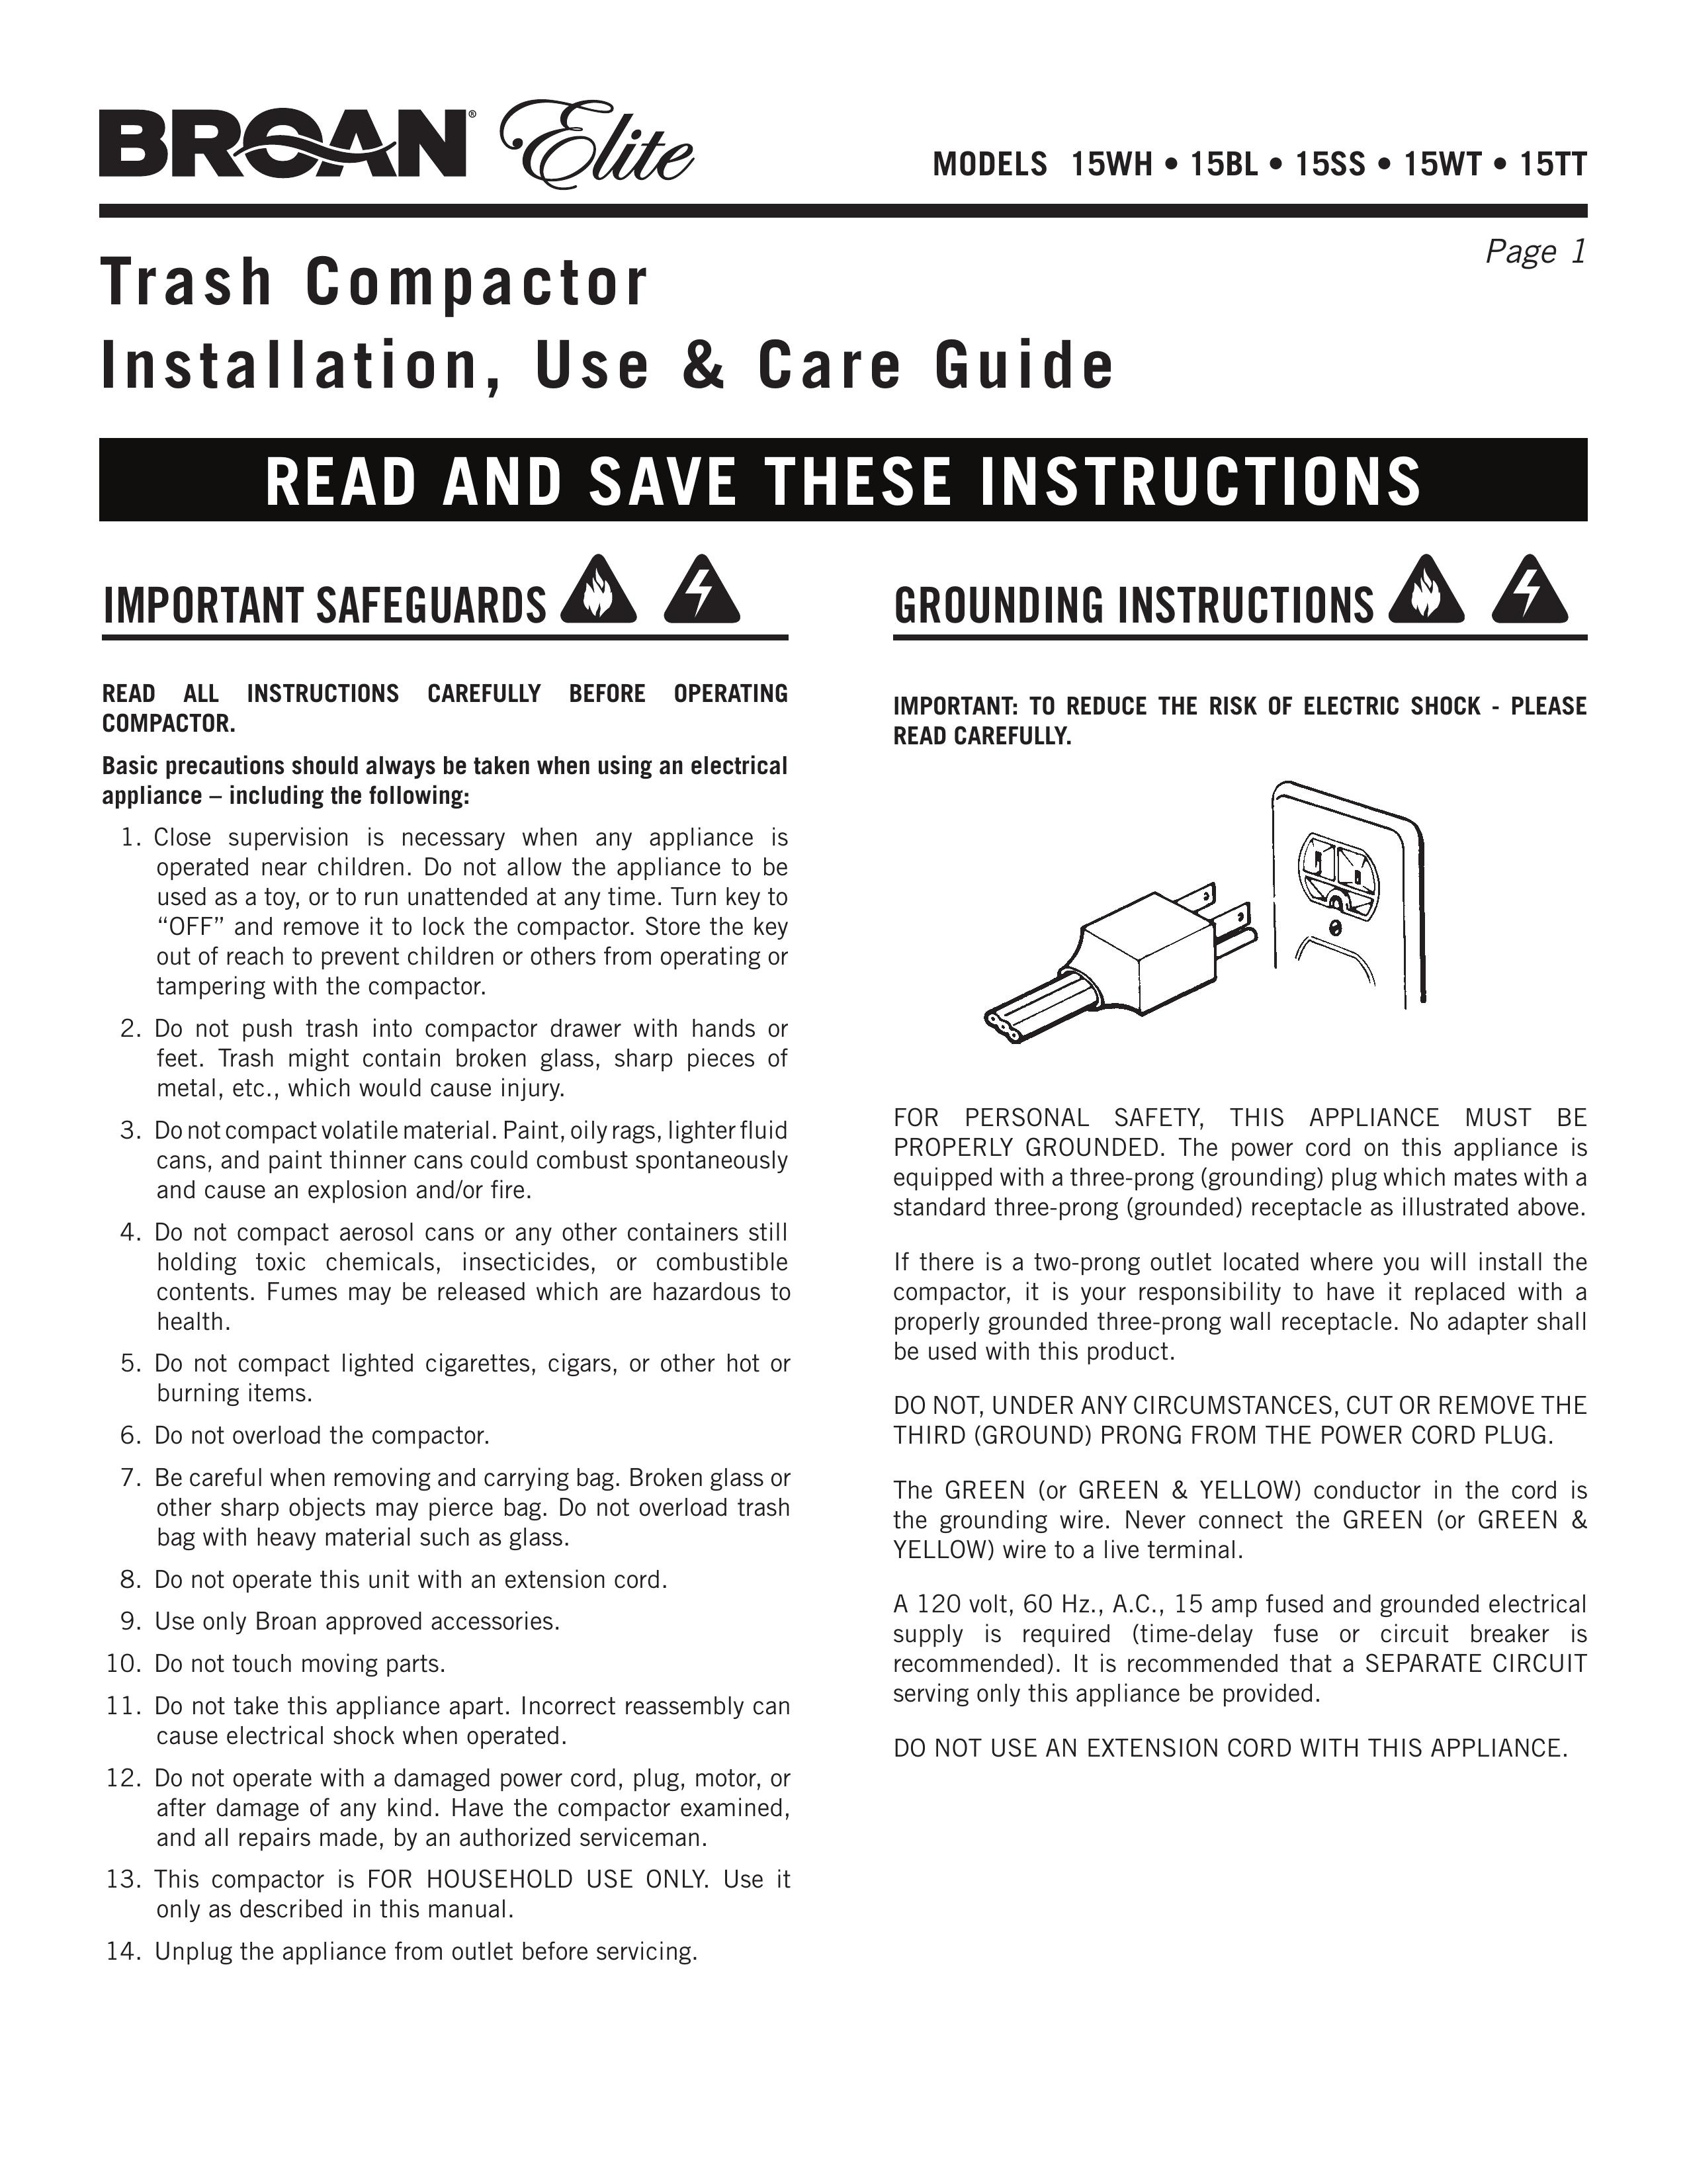 Broan 15ss Trash Compactor User Manual